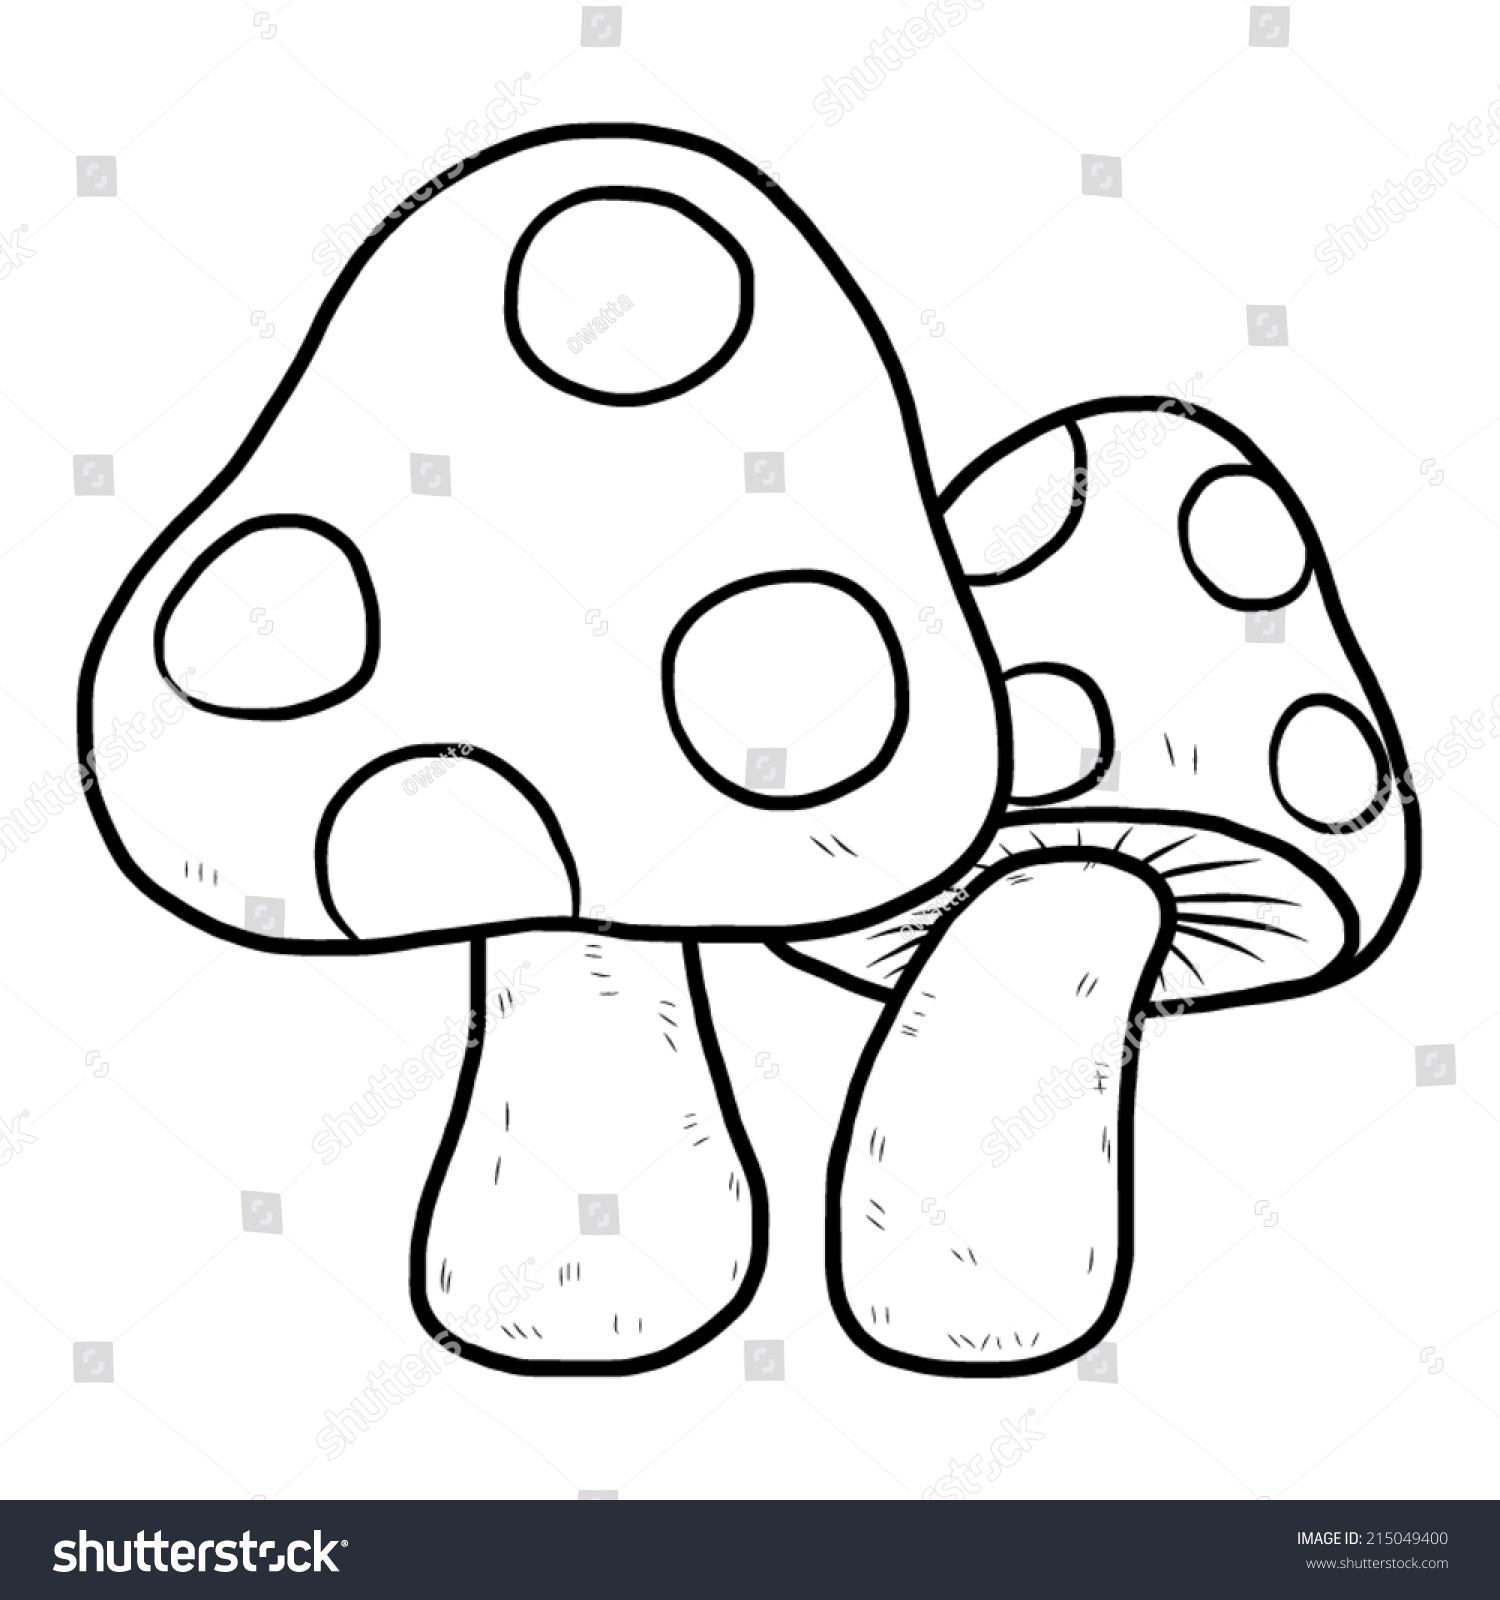 mushroom clipart black and white - photo #21